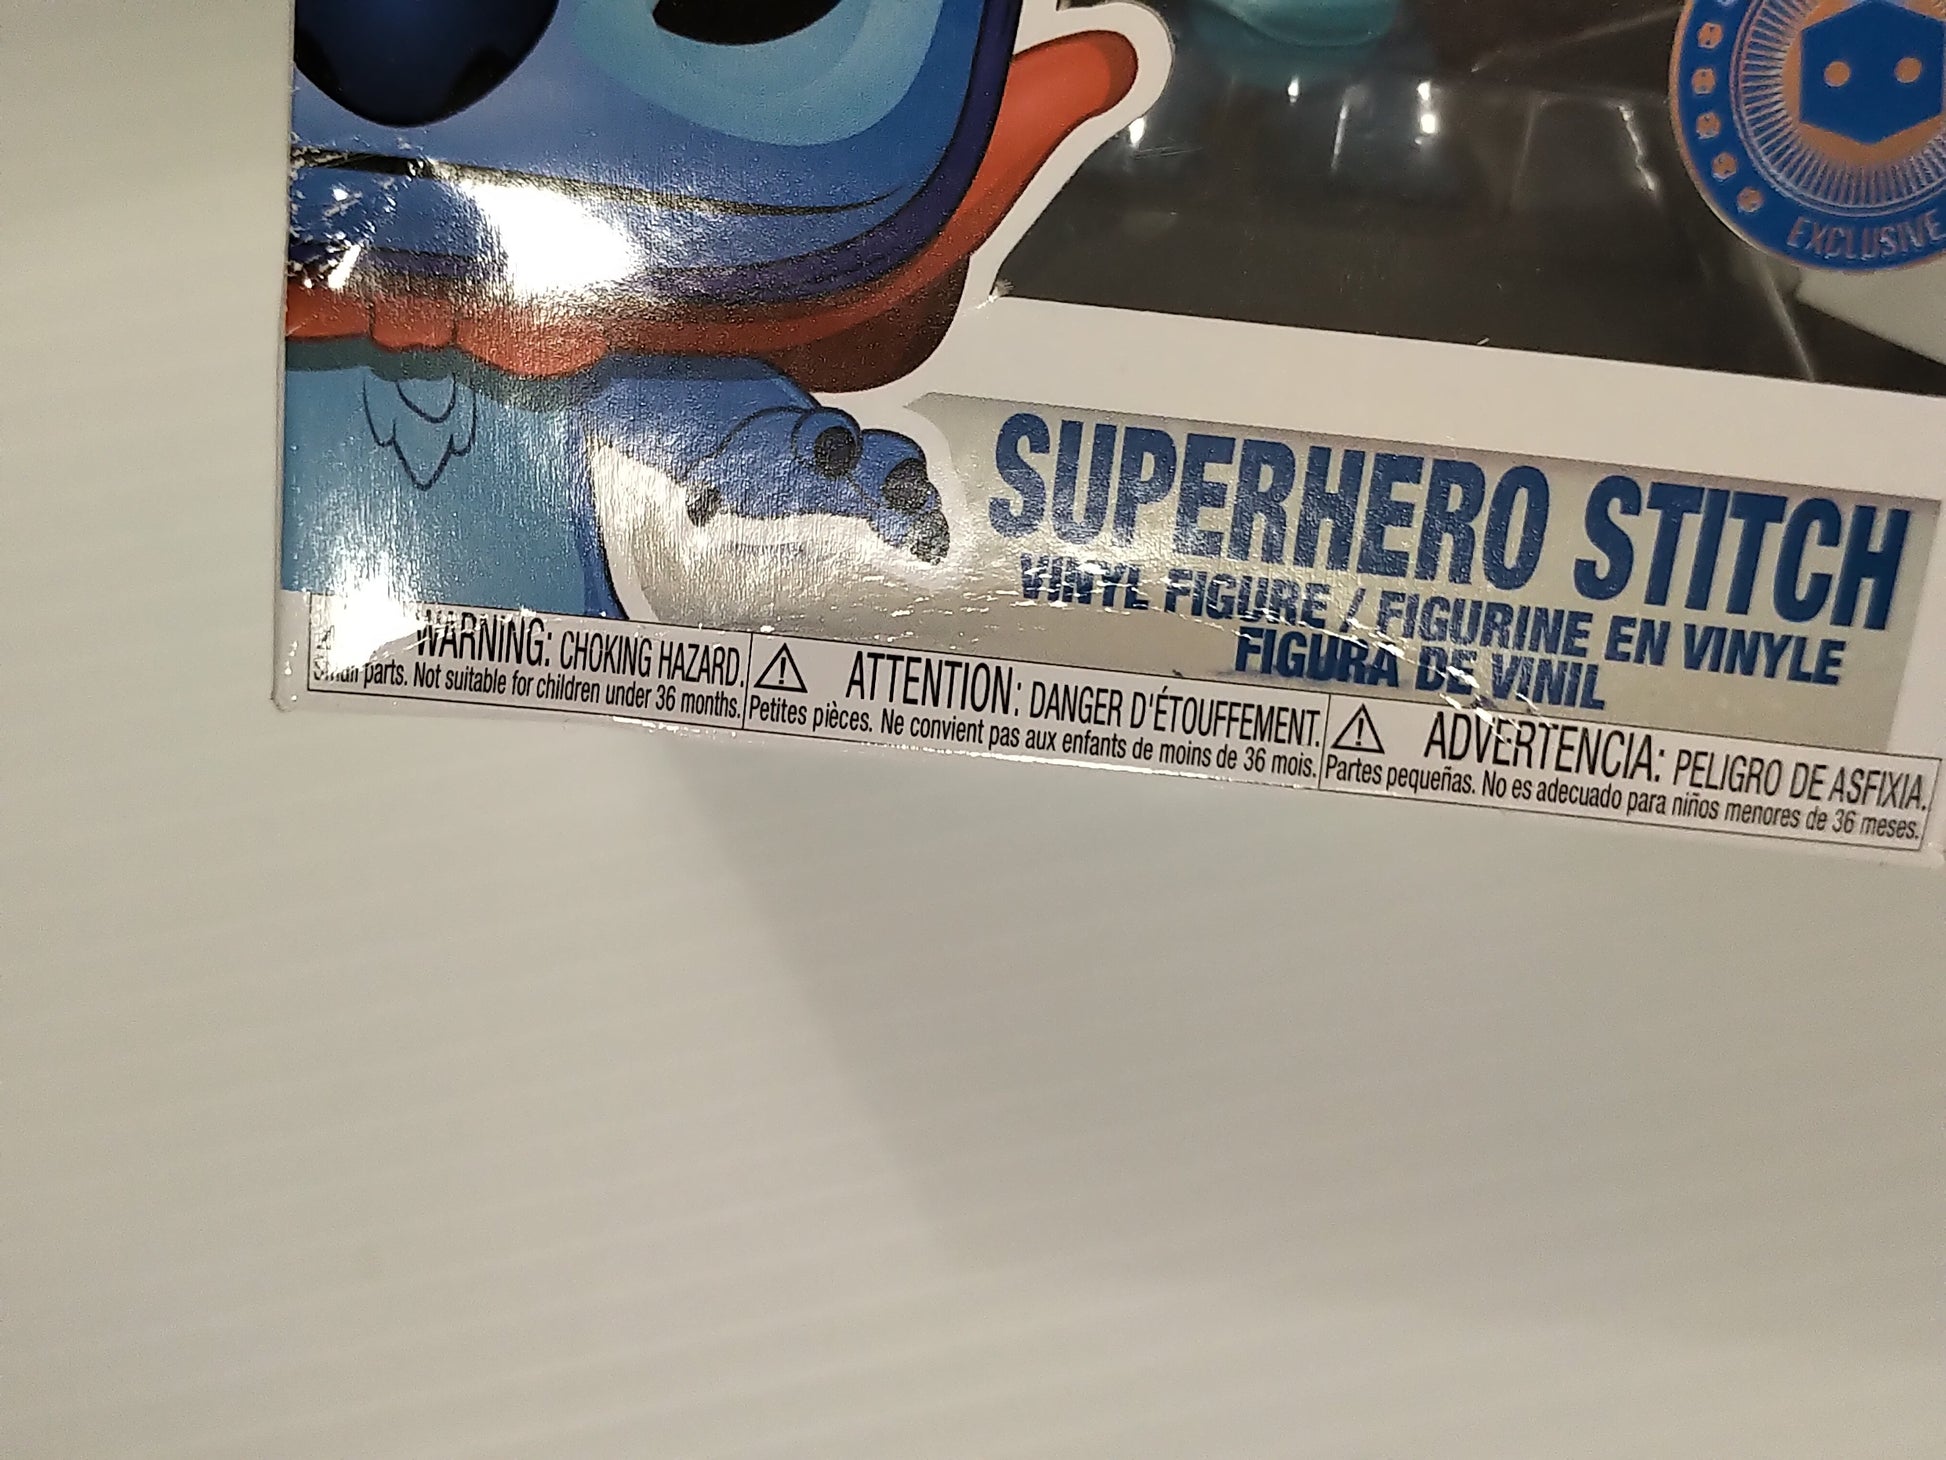 Funko POP Disney: Lilo & Stitch - Superhero Stitch Vinyl Figure